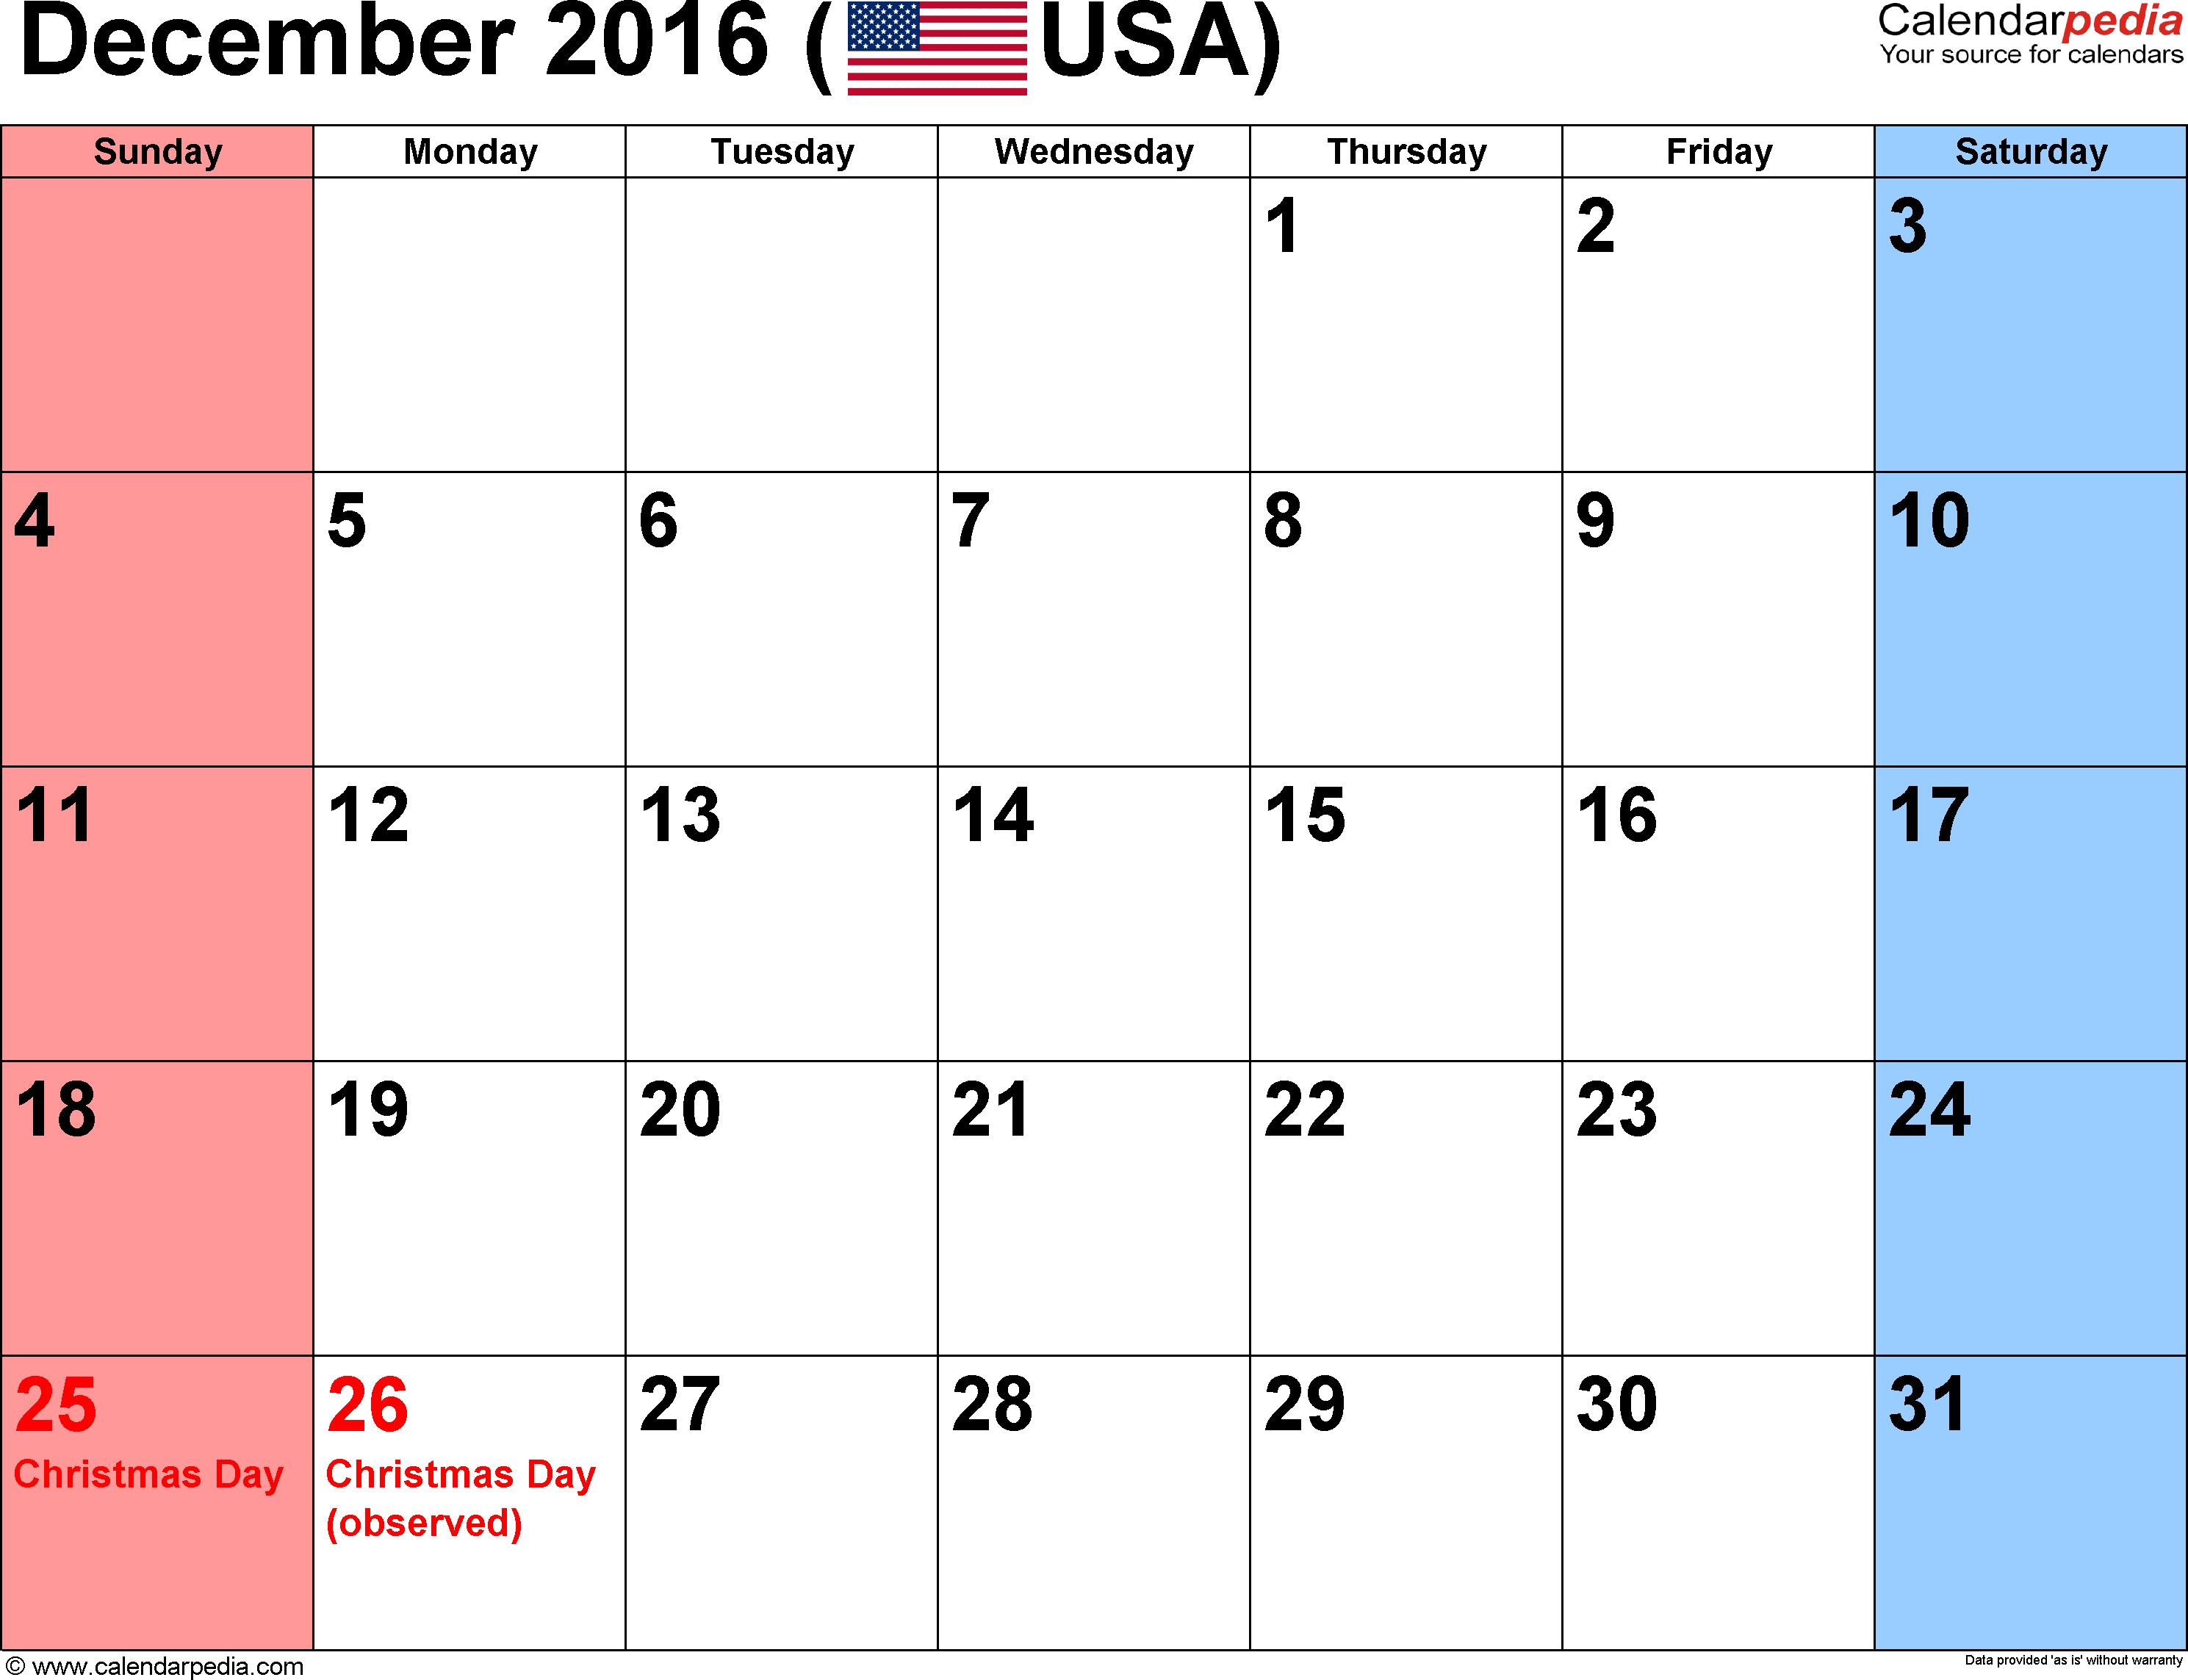 December 2016 Calendars for Word, Excel & PDF